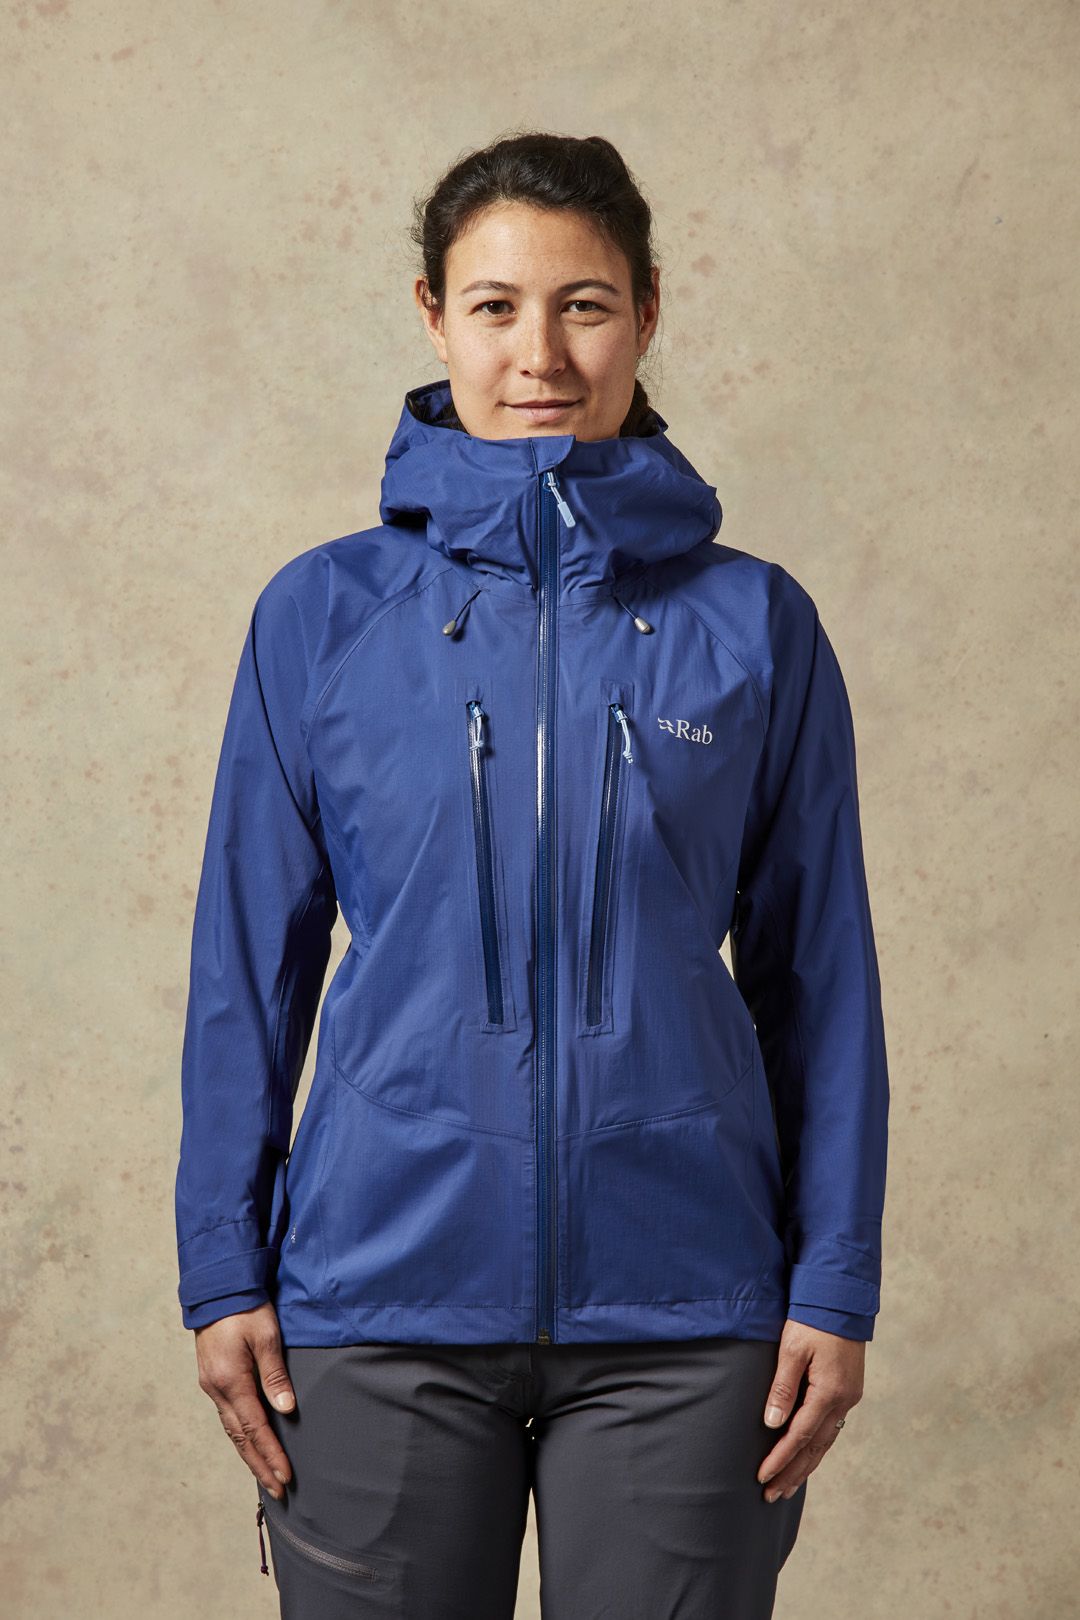 Rab Downpour Alpine Jacket - Hardshell jacket - Women's